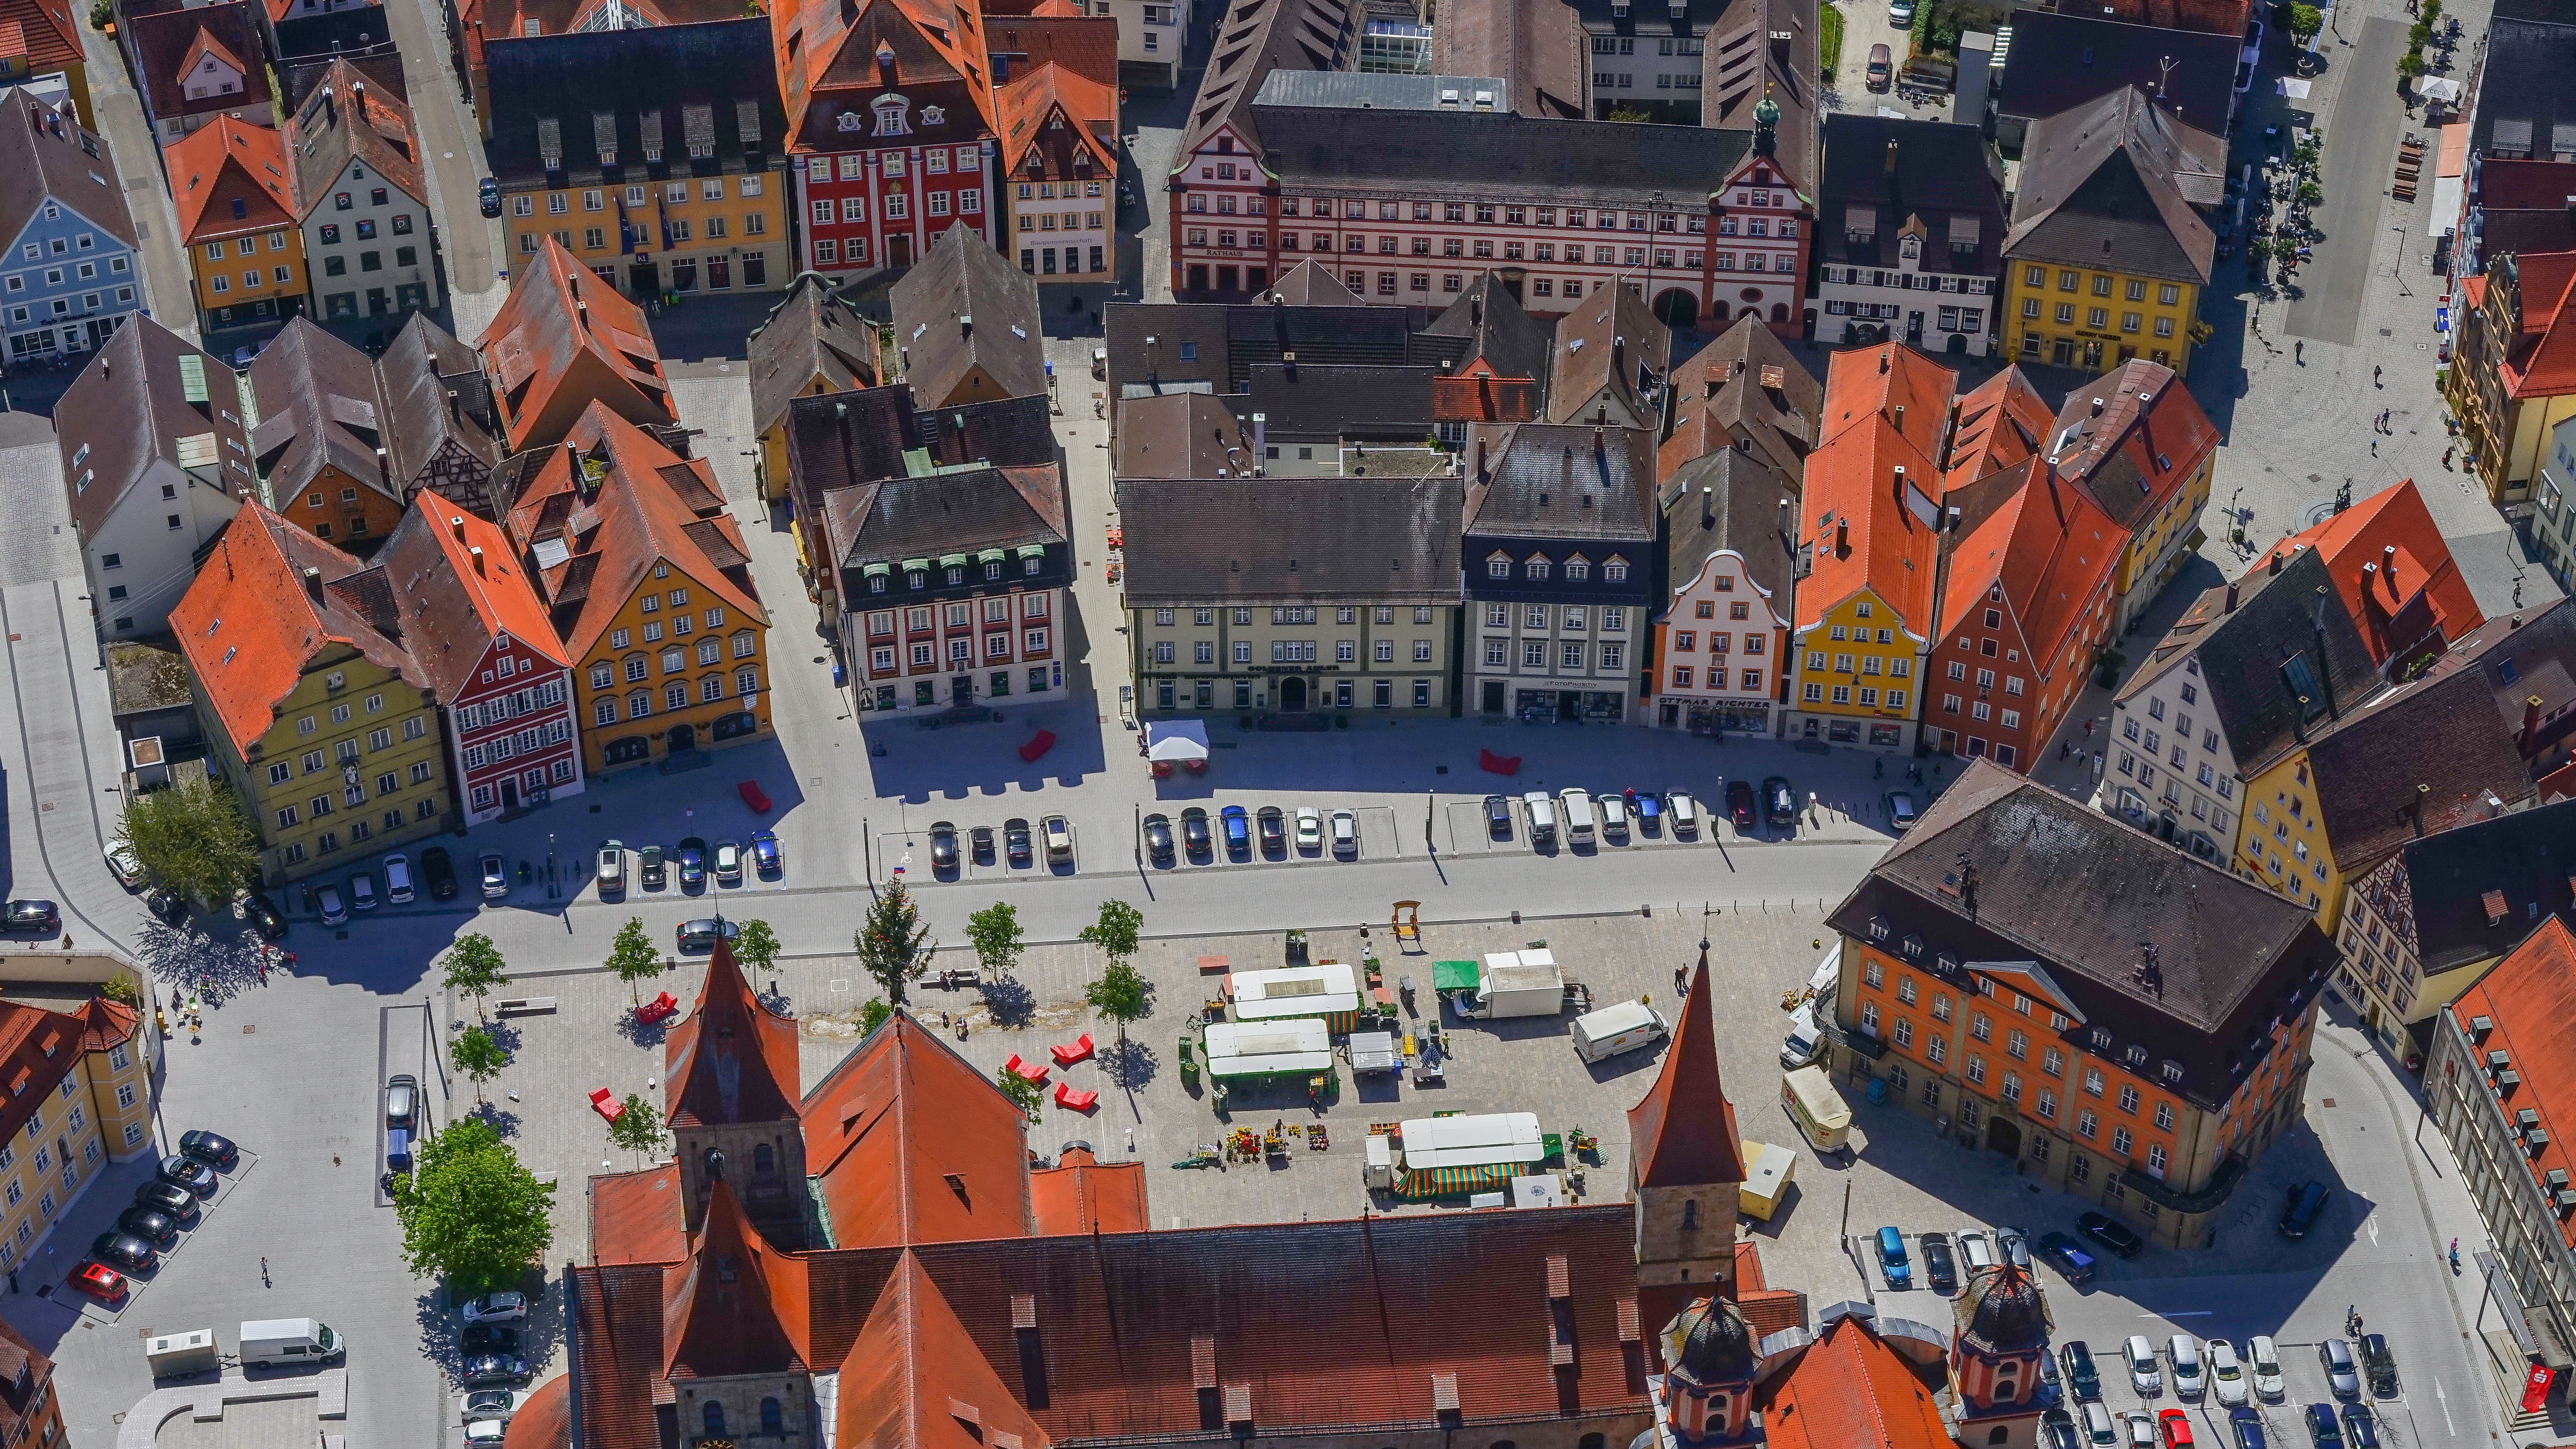 Luftbild Marktplatz mit Marktständen